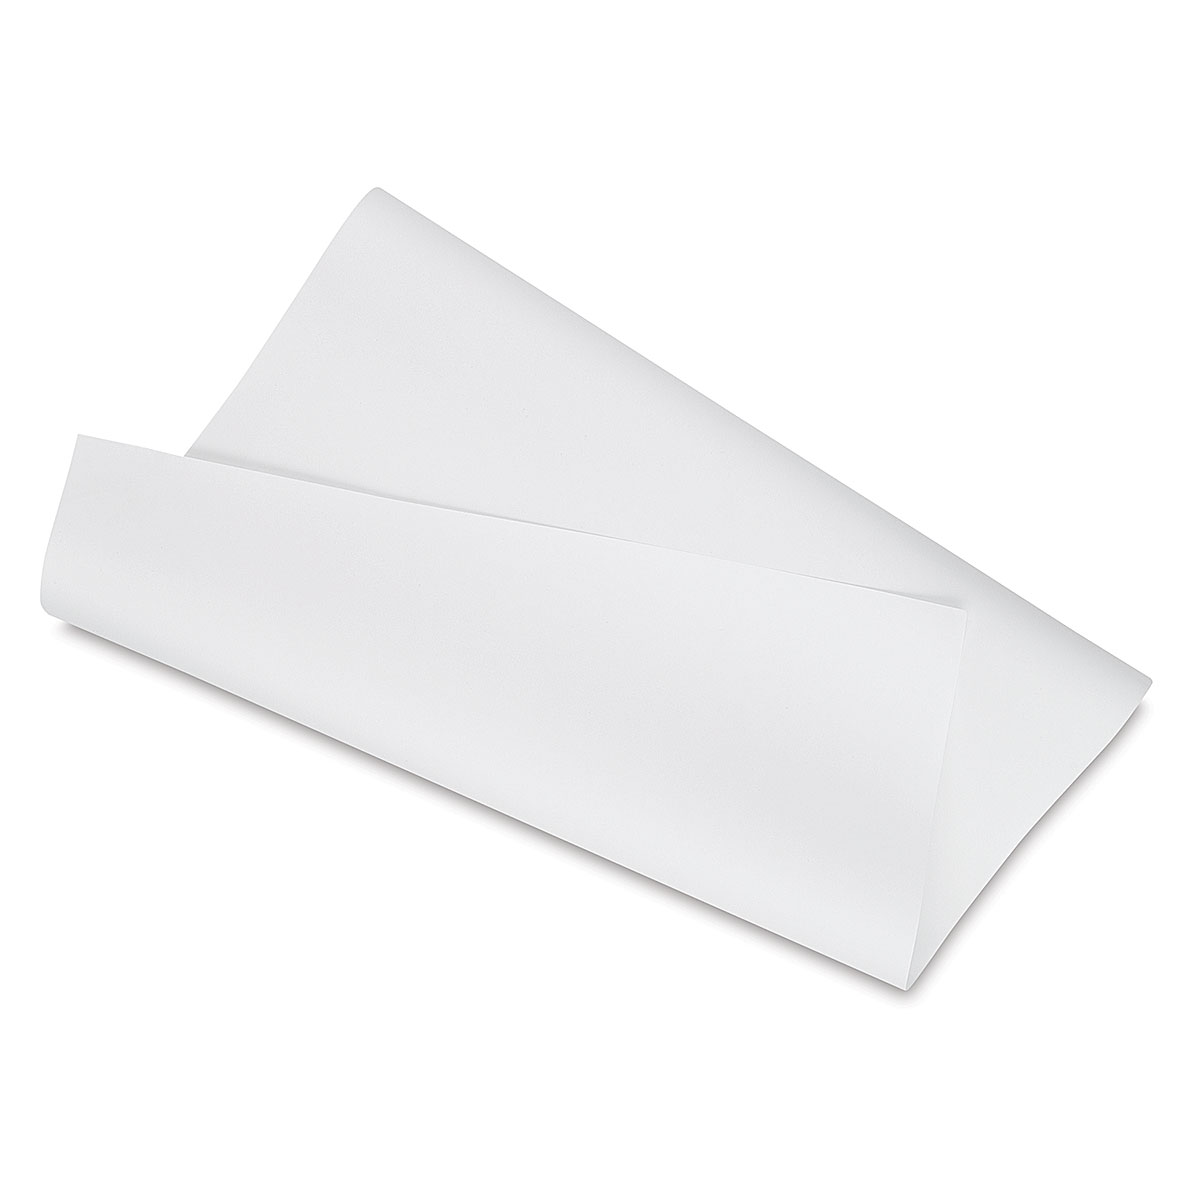 Clearprint Translucent Storybook Sketch Pad Translucent White 10201720 